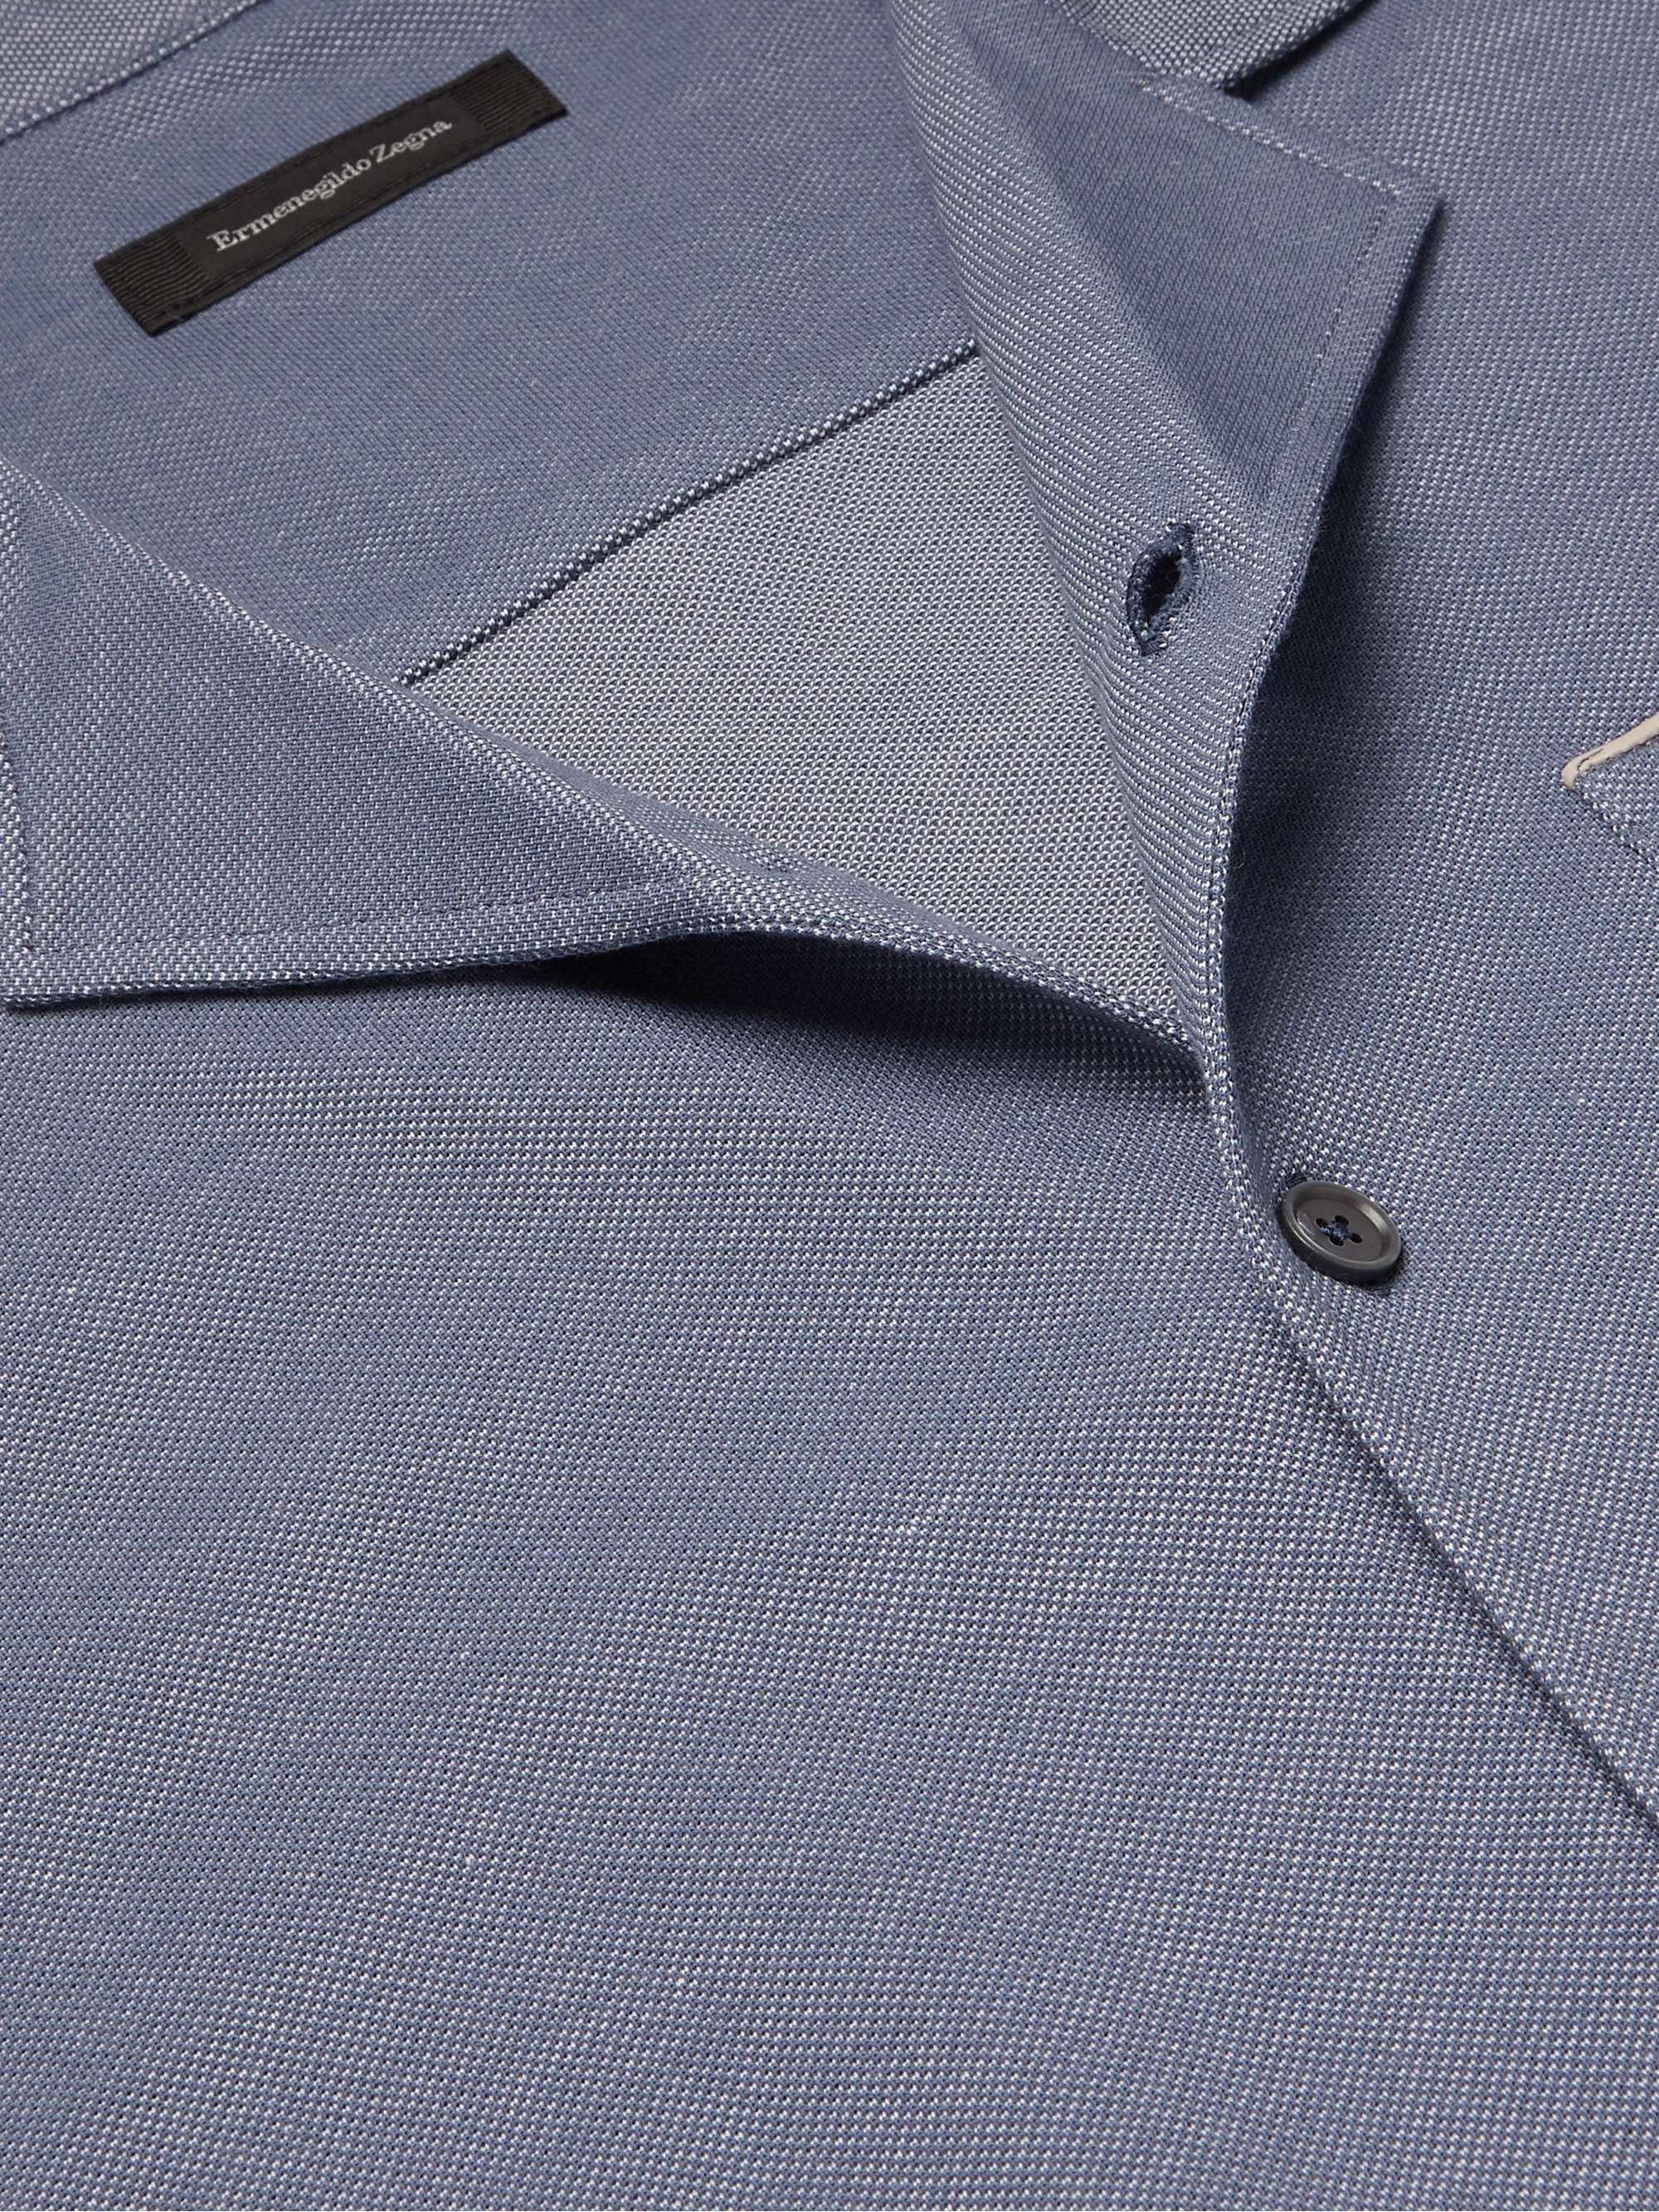 ERMENEGILDO ZEGNA Camp-Collar Cotton-Piqué Shirt